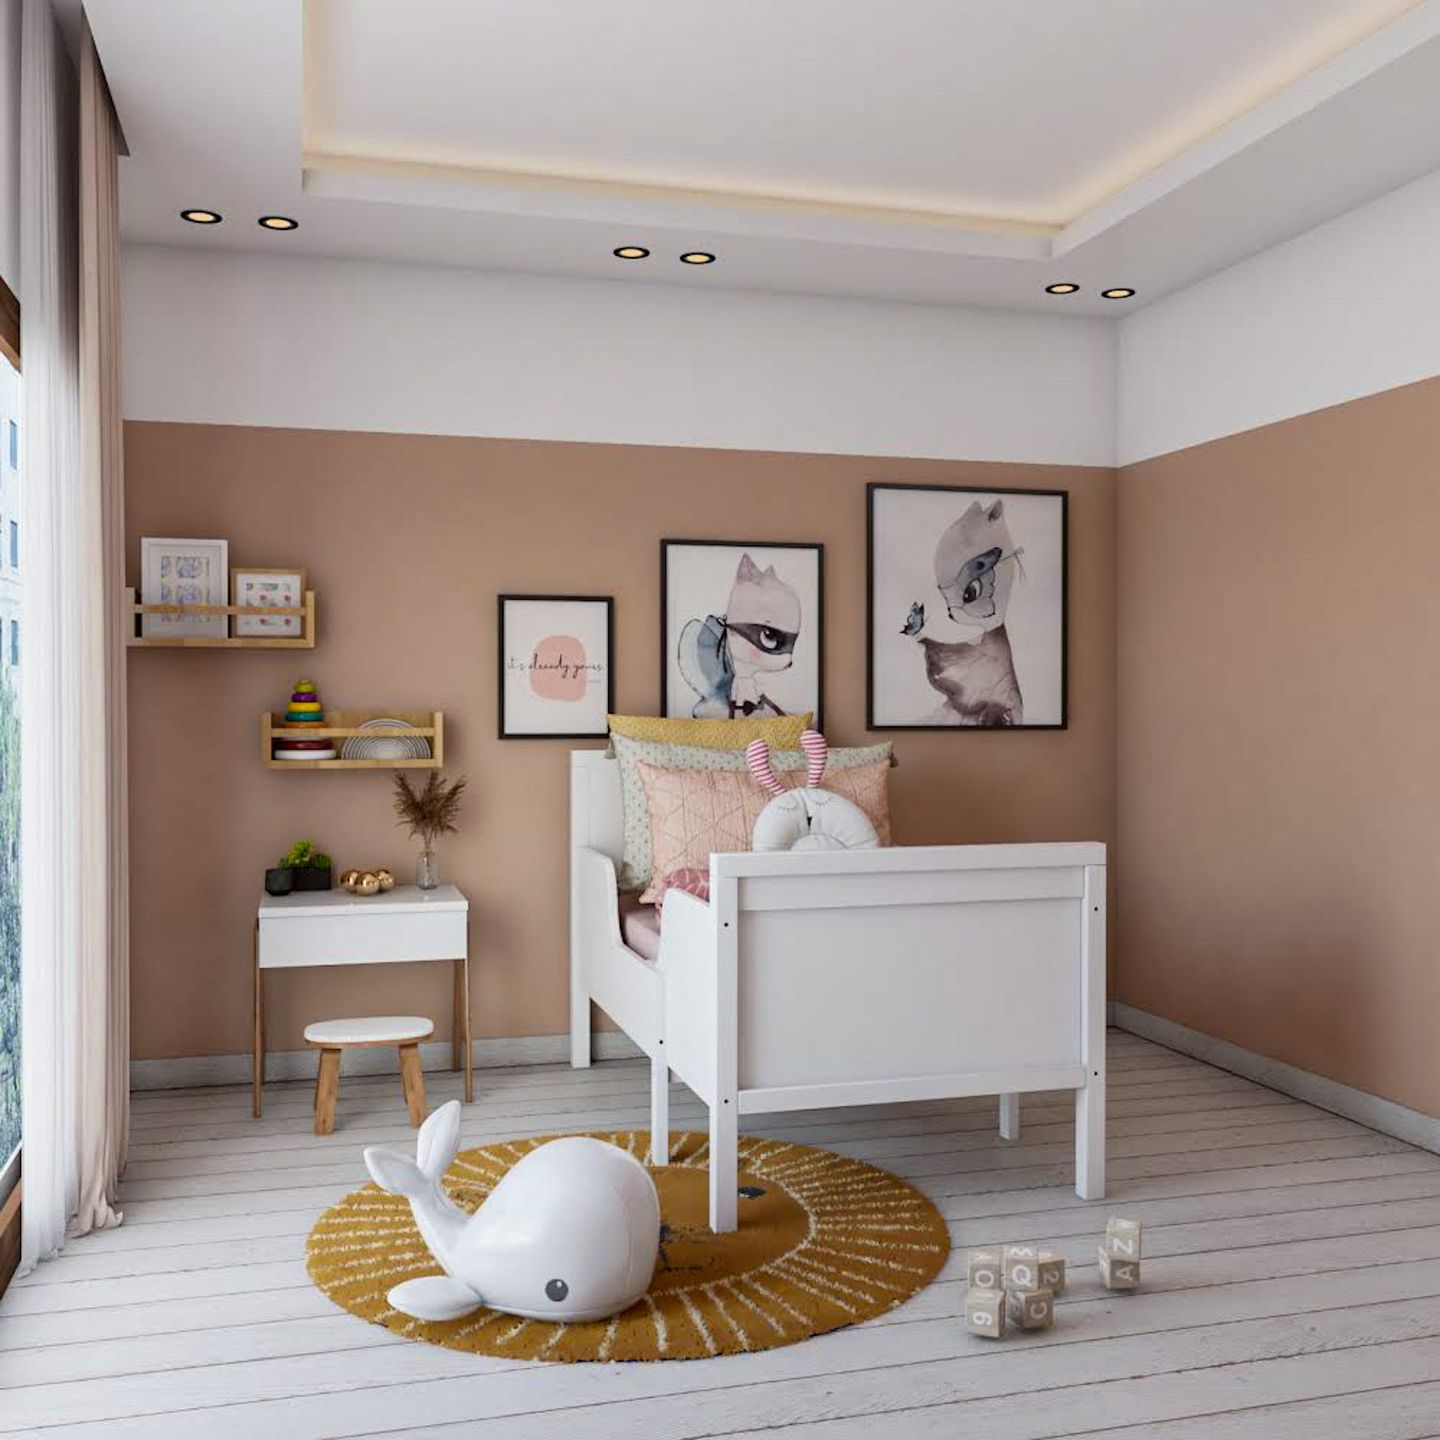 Kids Bedroom Design With Wooden Wall Shelves - Livspace